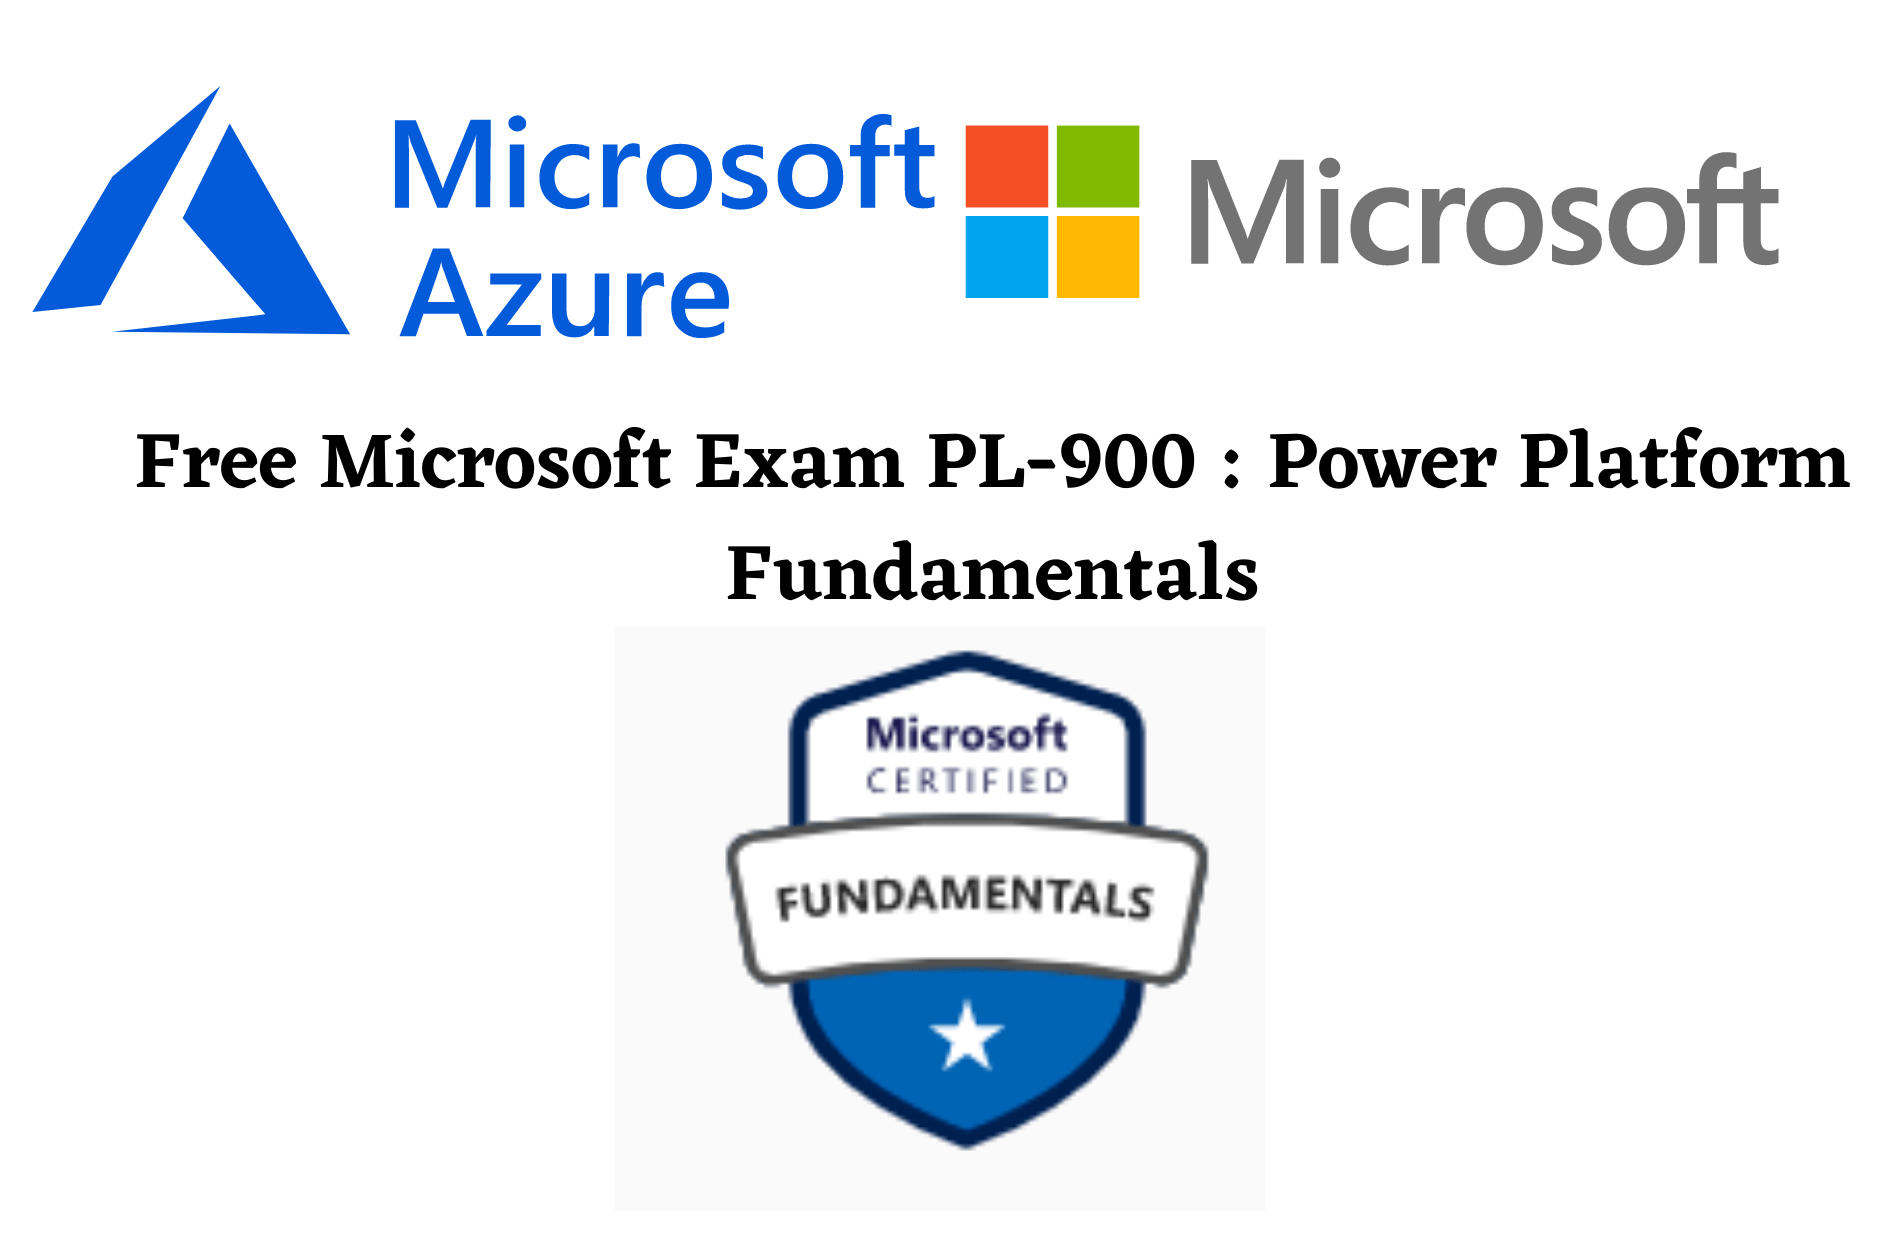 Free Microsoft Exam PL-900 : Power Platform Fundamentals